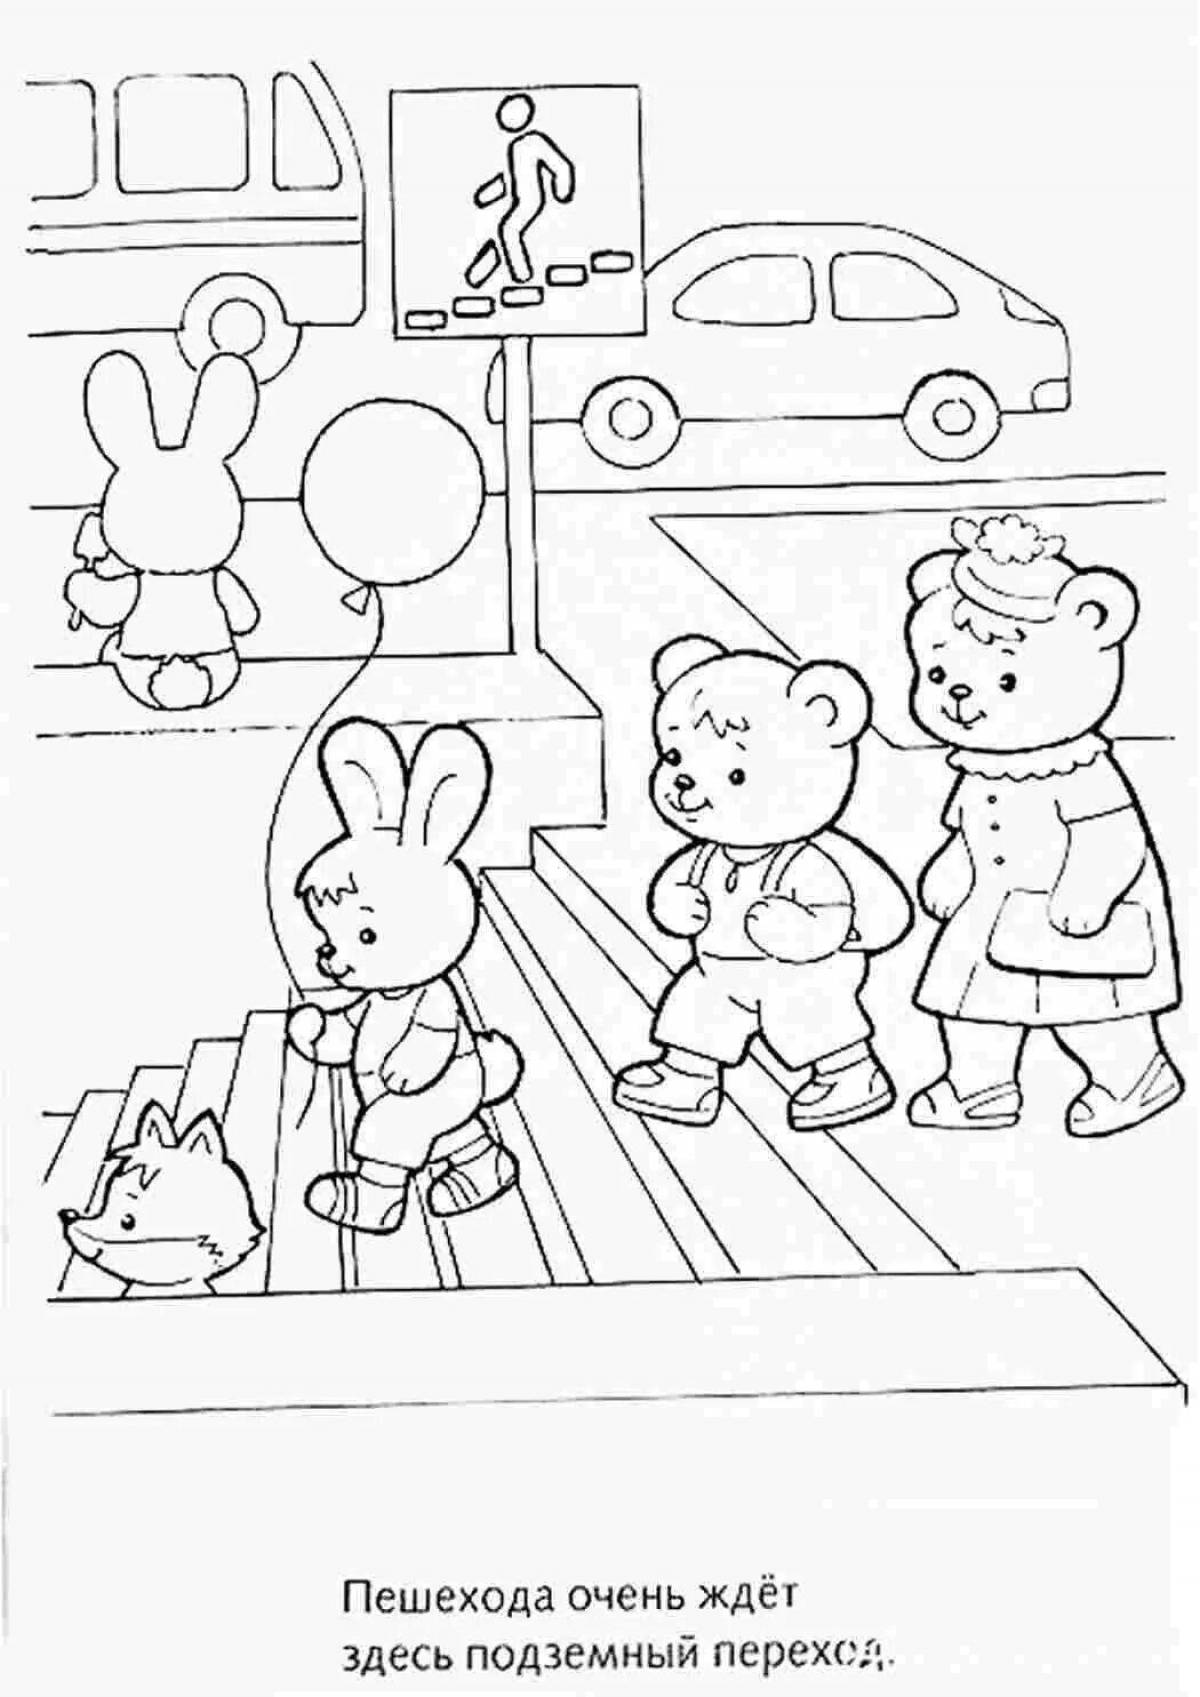 Attractive traffic rules coloring book for schoolchildren